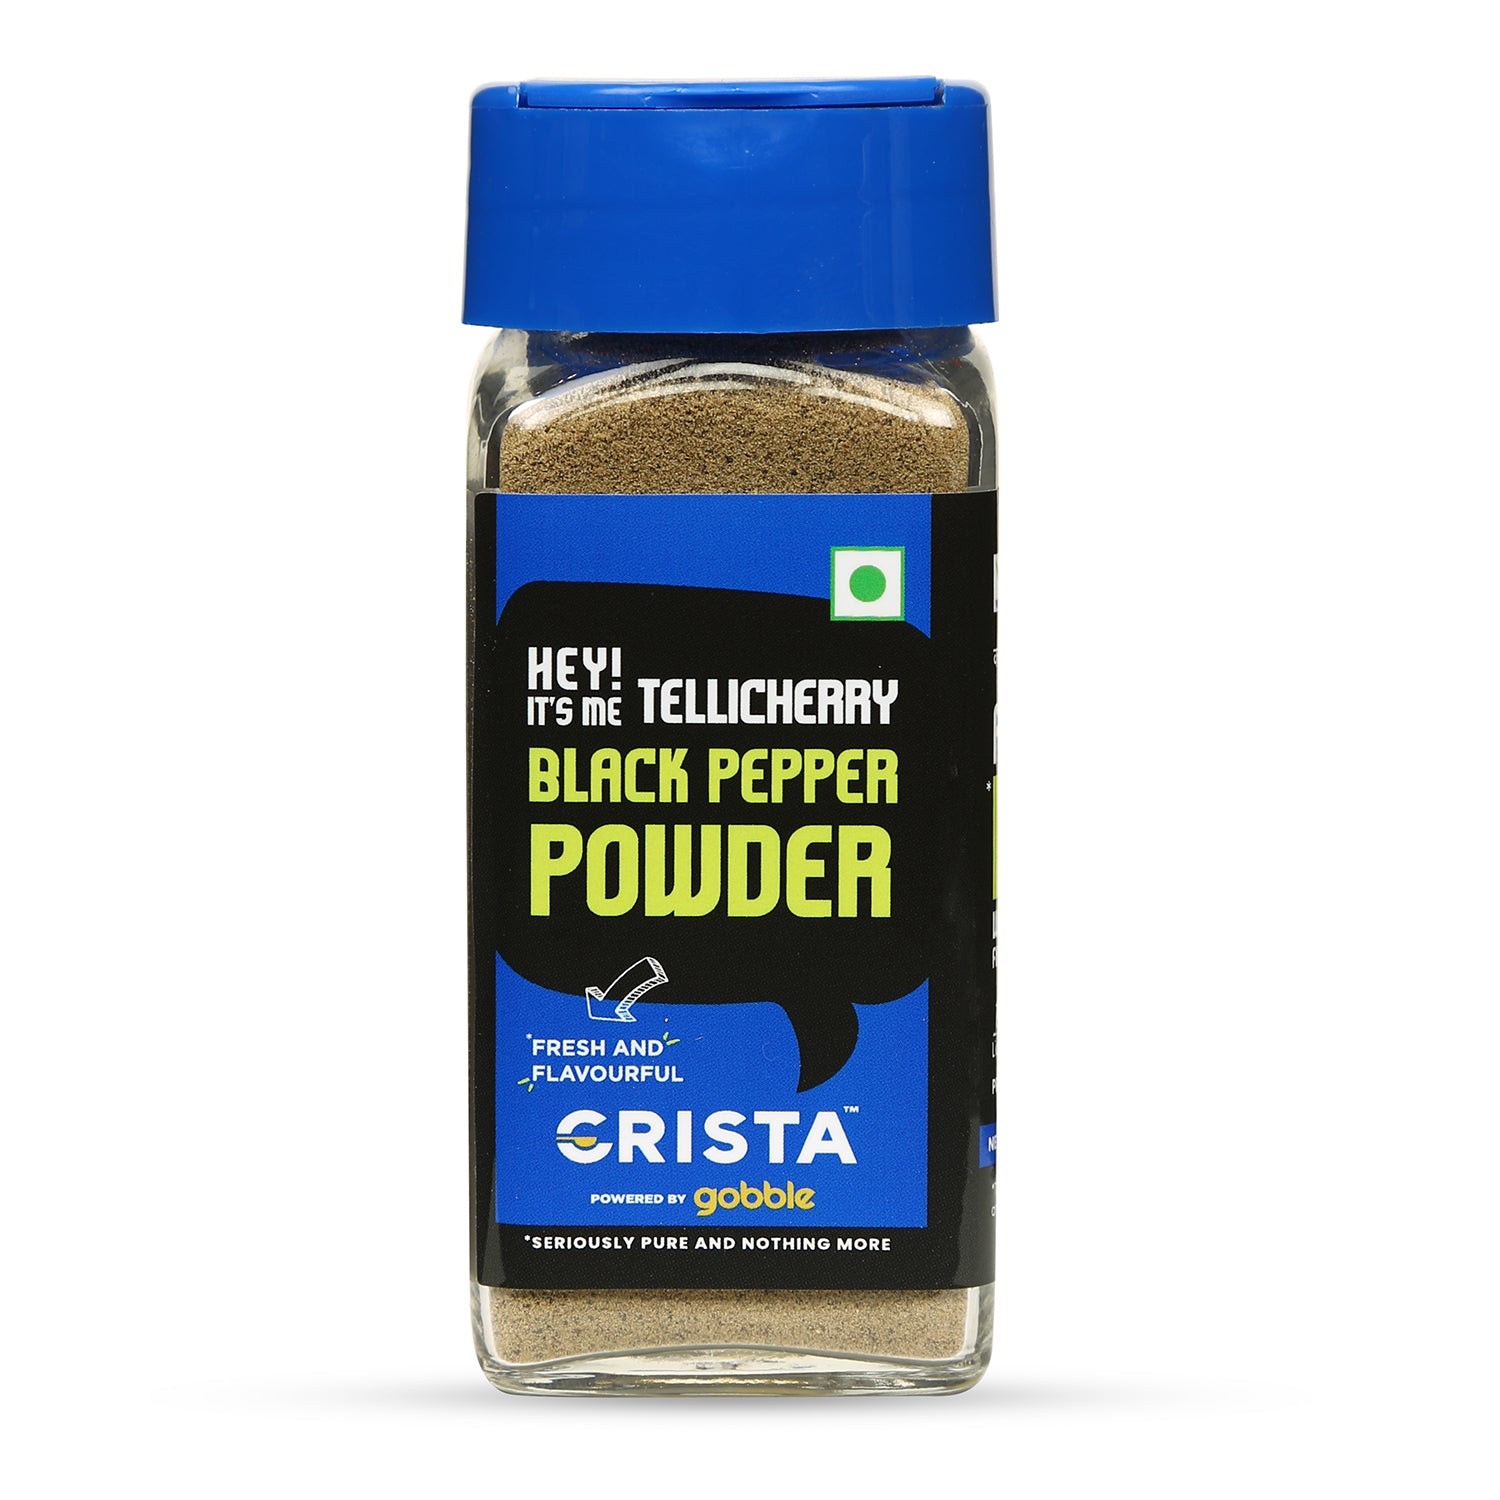 CRISTA Black Pepper Powder